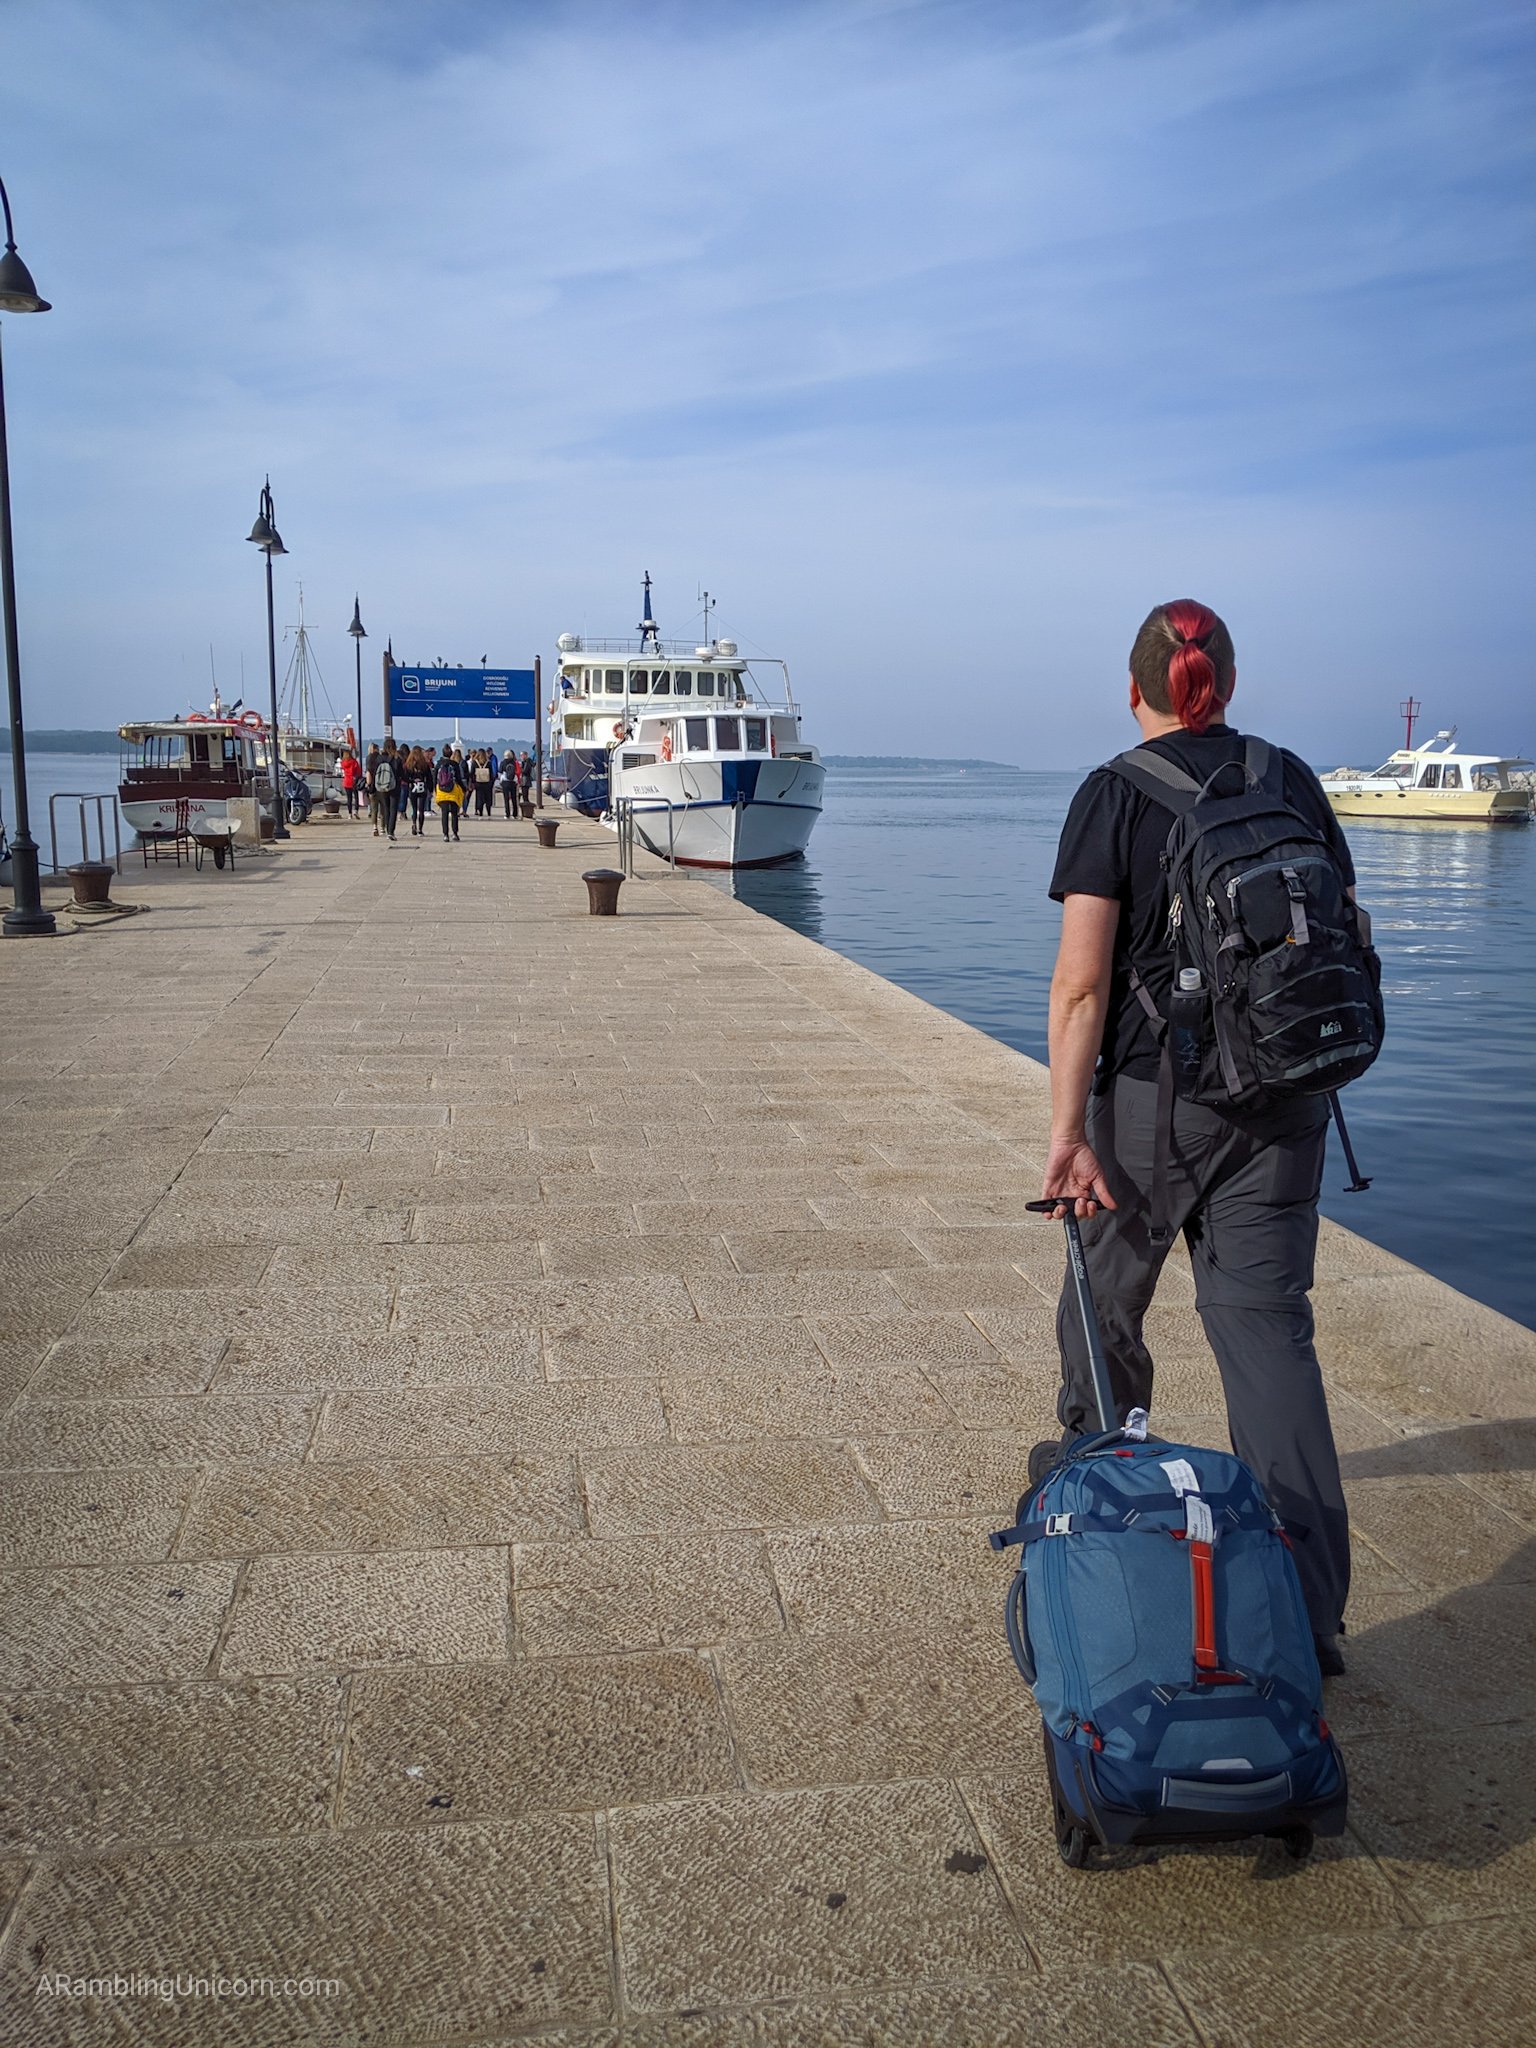 Daniel walks along the dock to the Brijuni Ferry.